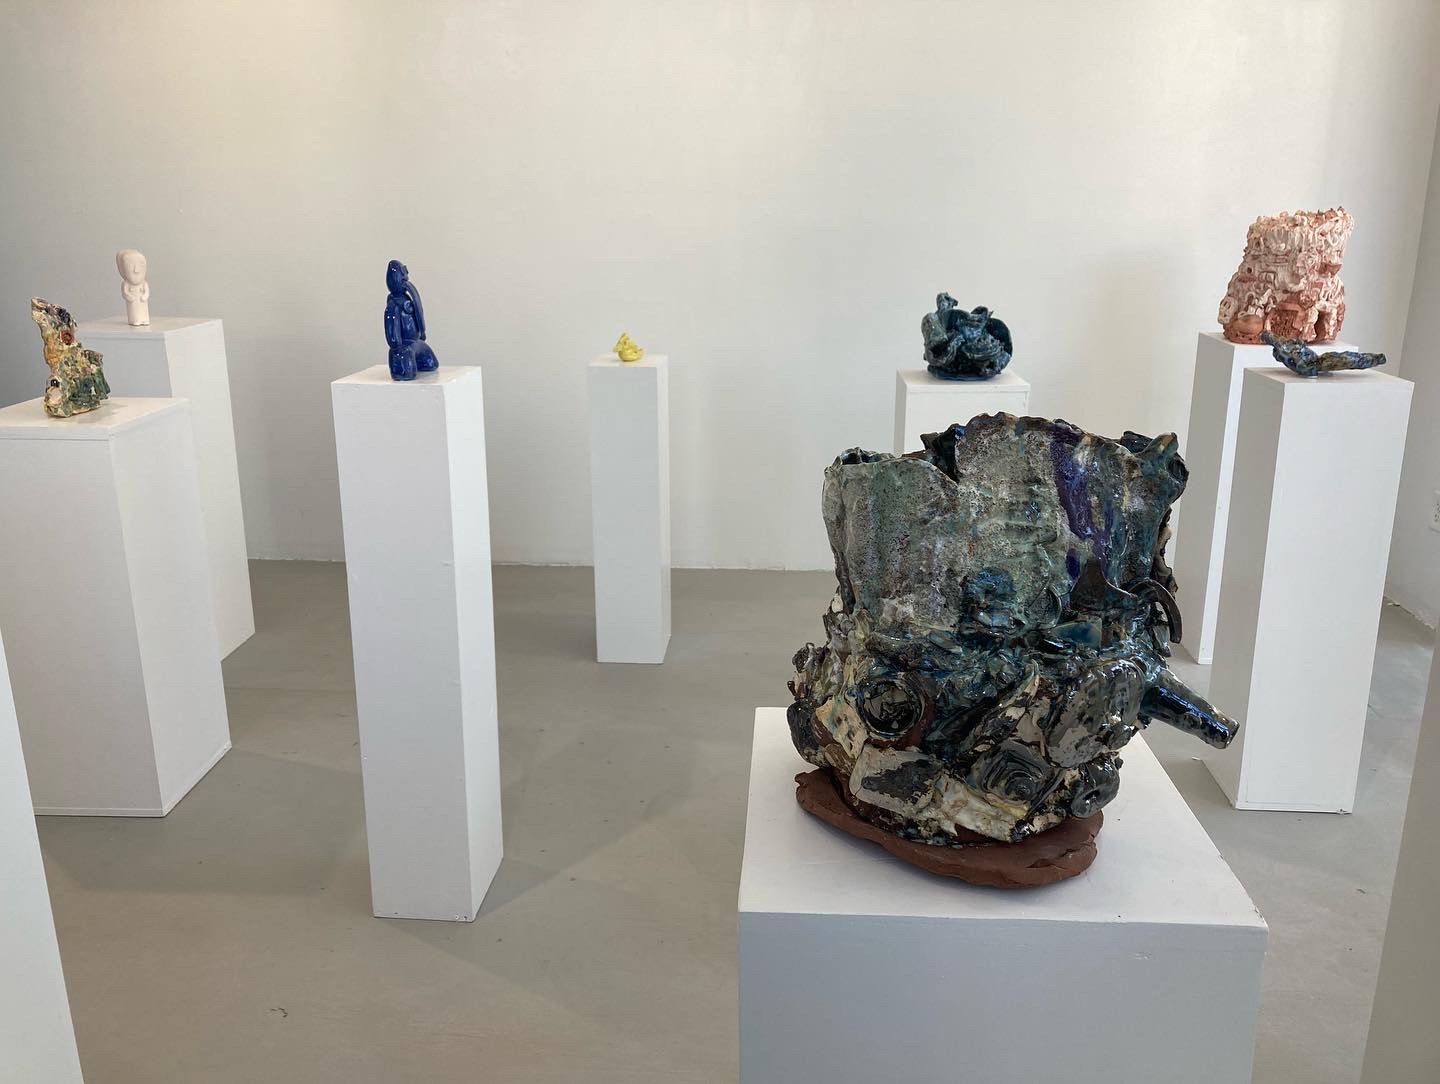  Installation view of “Amok” (II), Artshack Gallery, ceramic sculpture, dimensions variable, 2022 